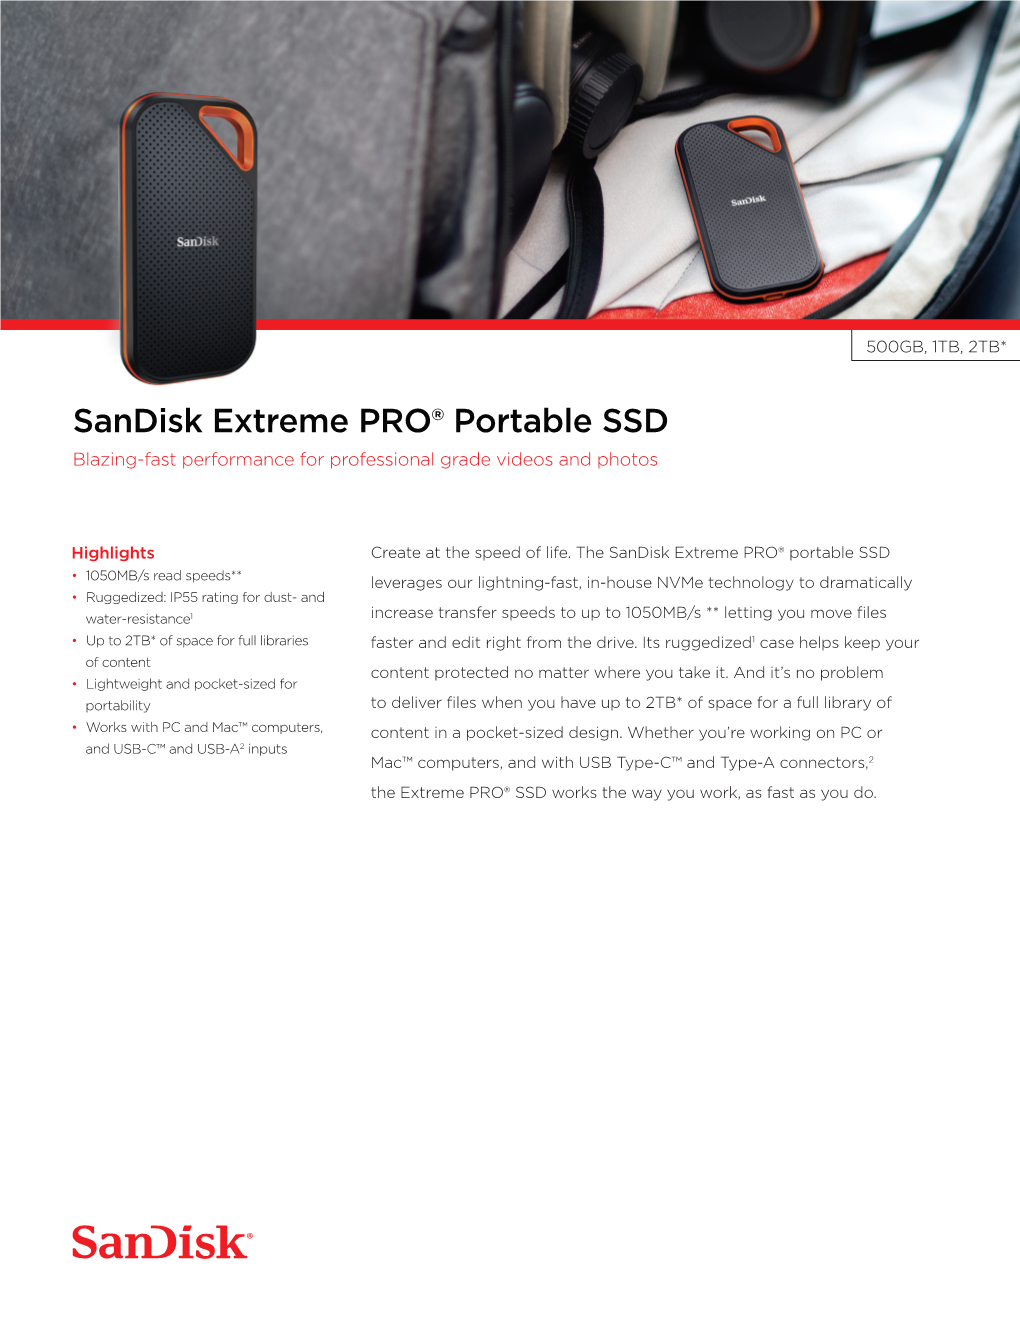 Data Sheet: Sandisk Extreme PRO Portable